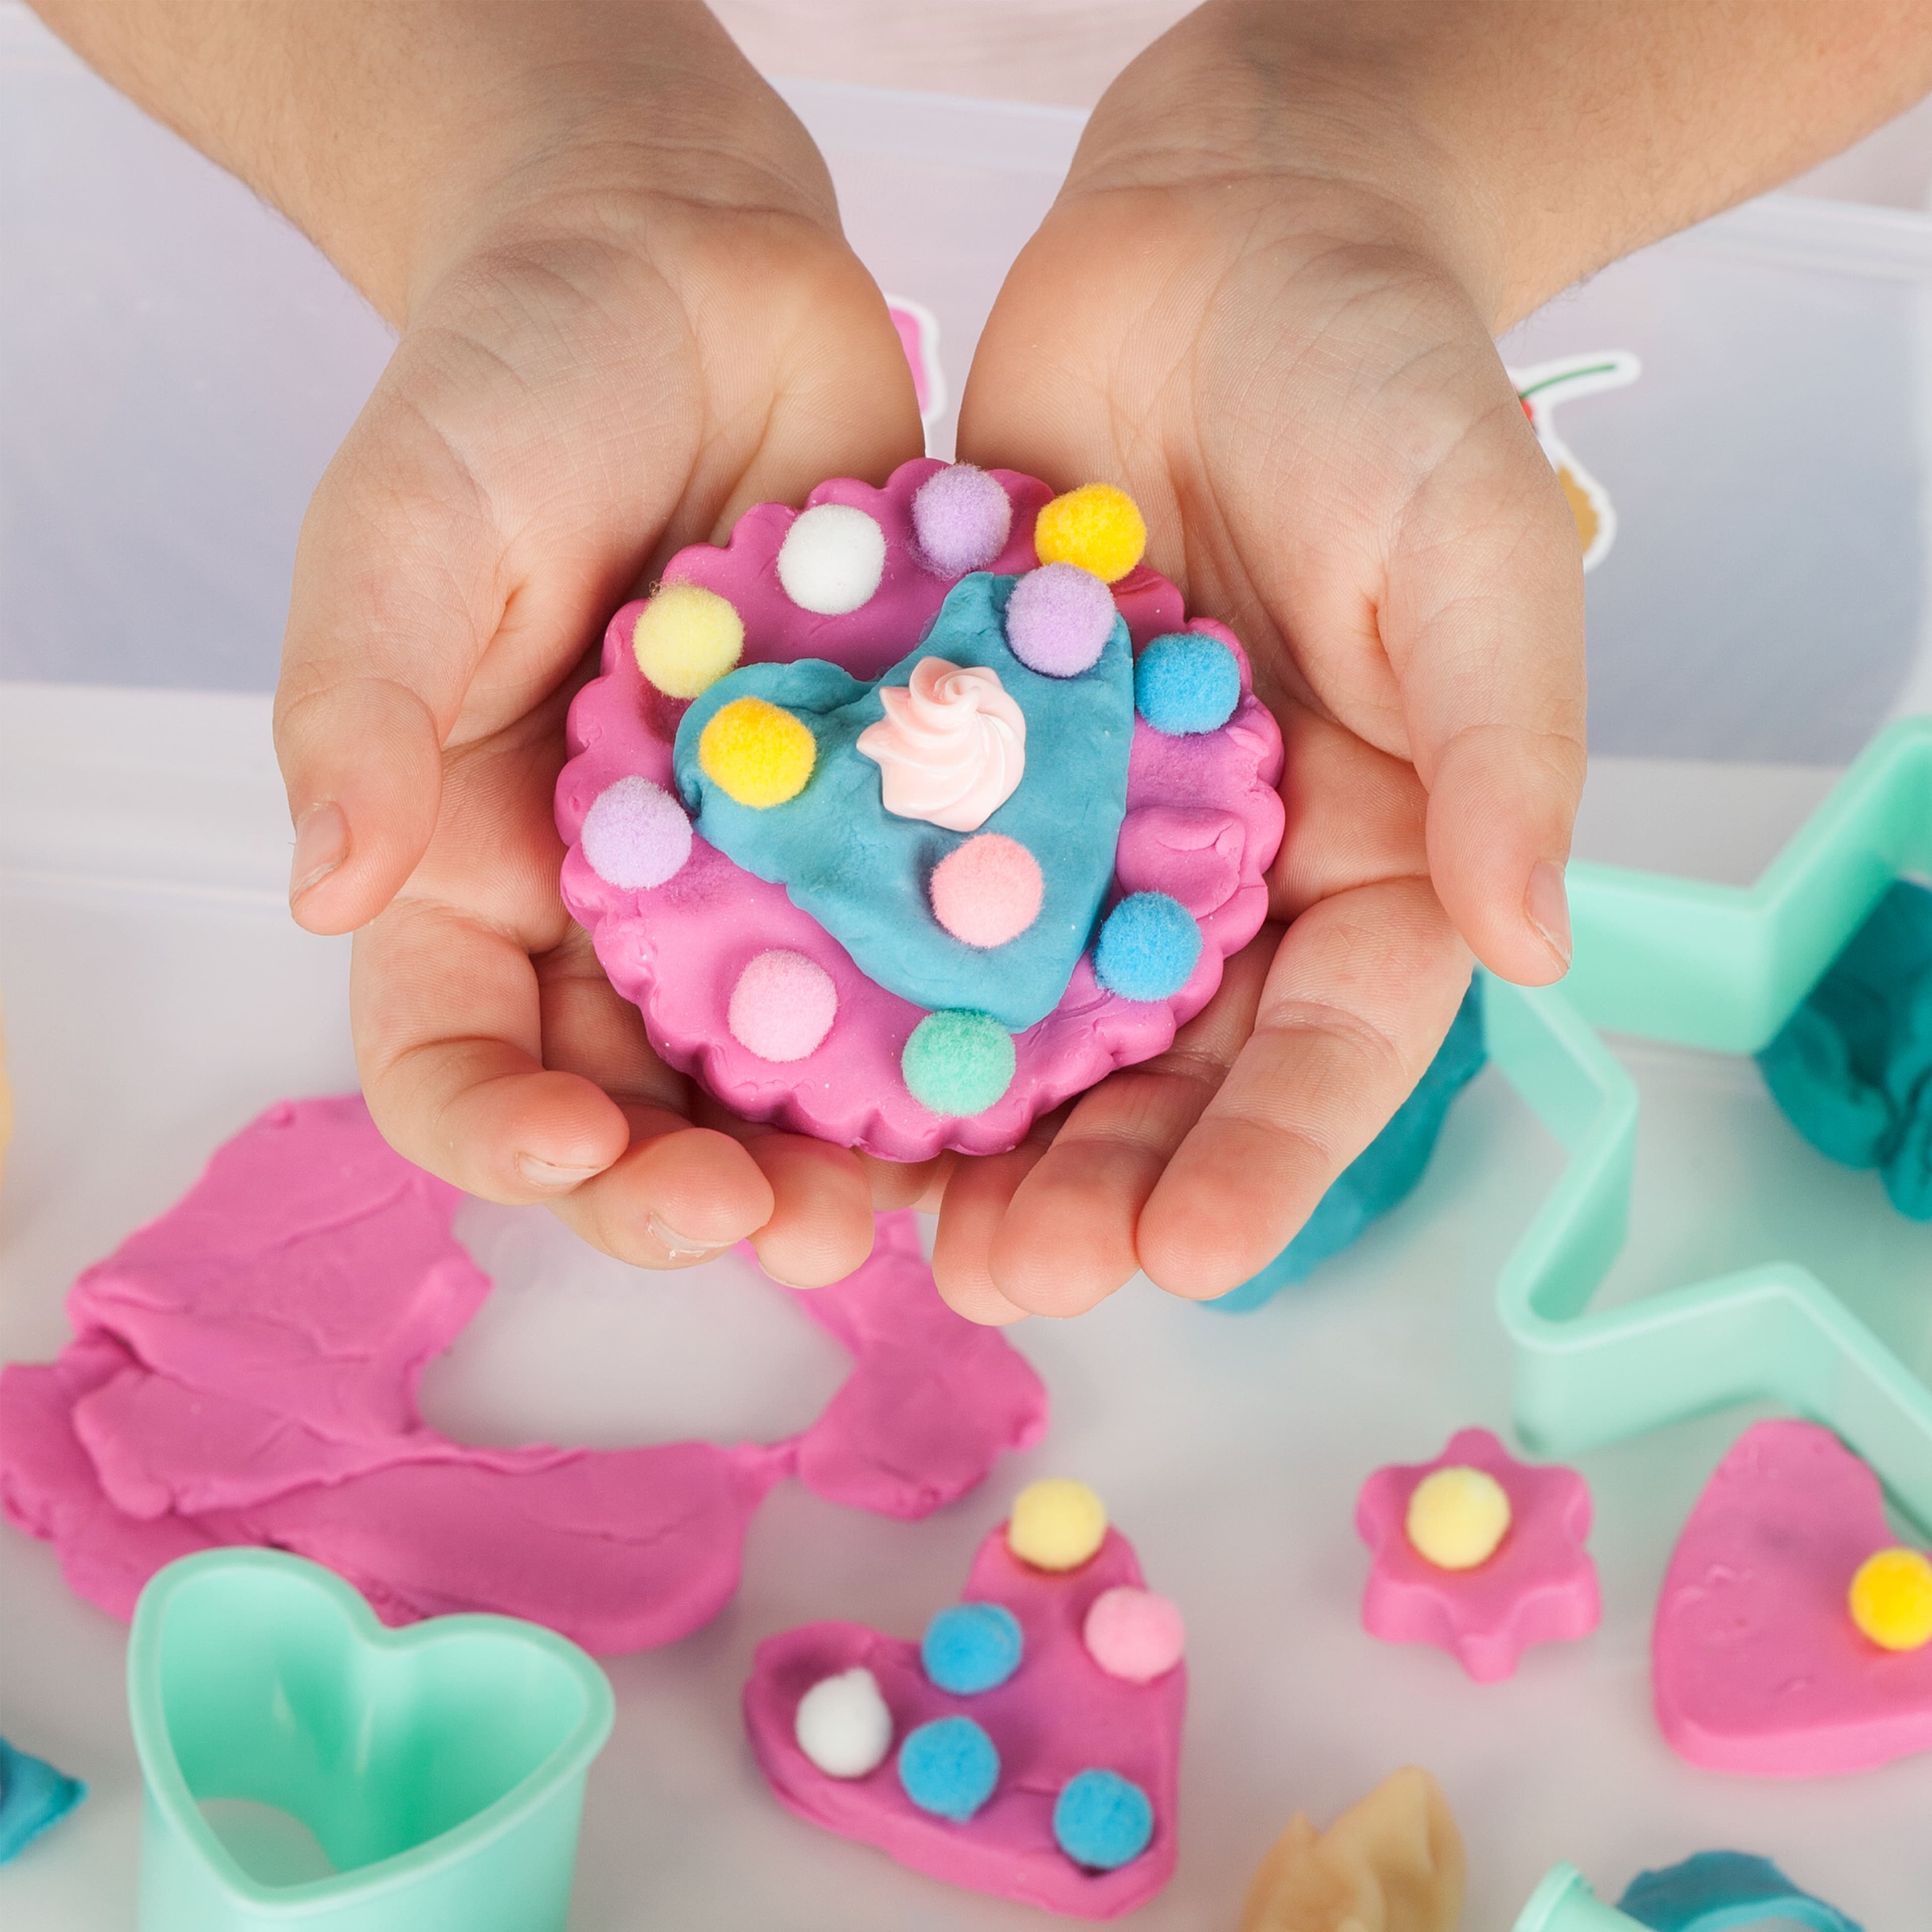 8 Pack: Creativity for Kids&#xAE; Bake Shop Sensory Bin